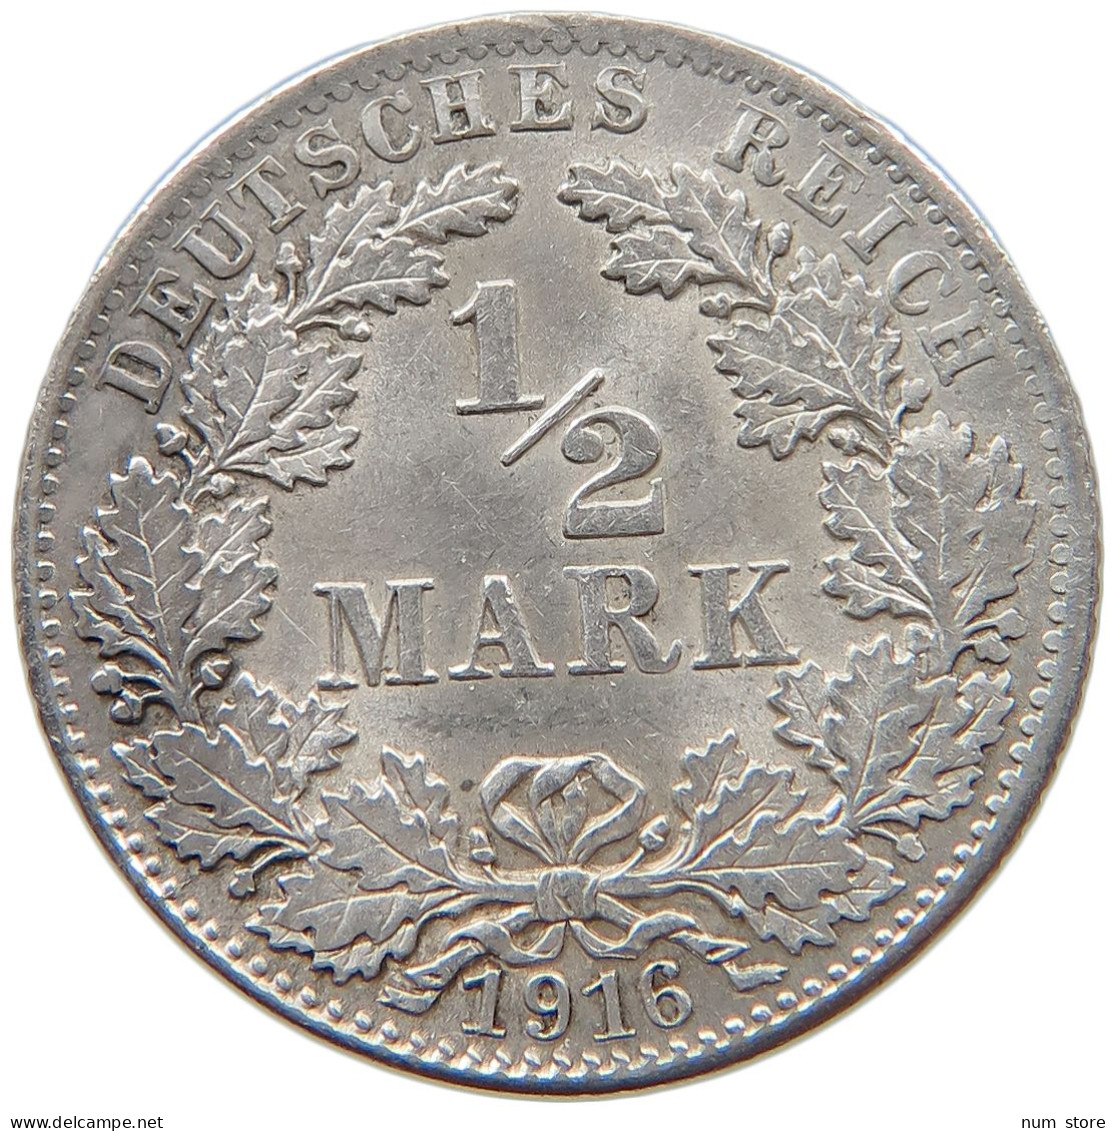 KAISERREICH 1/2 MARK 1916 D  #MA 105120 - 1/2 Mark